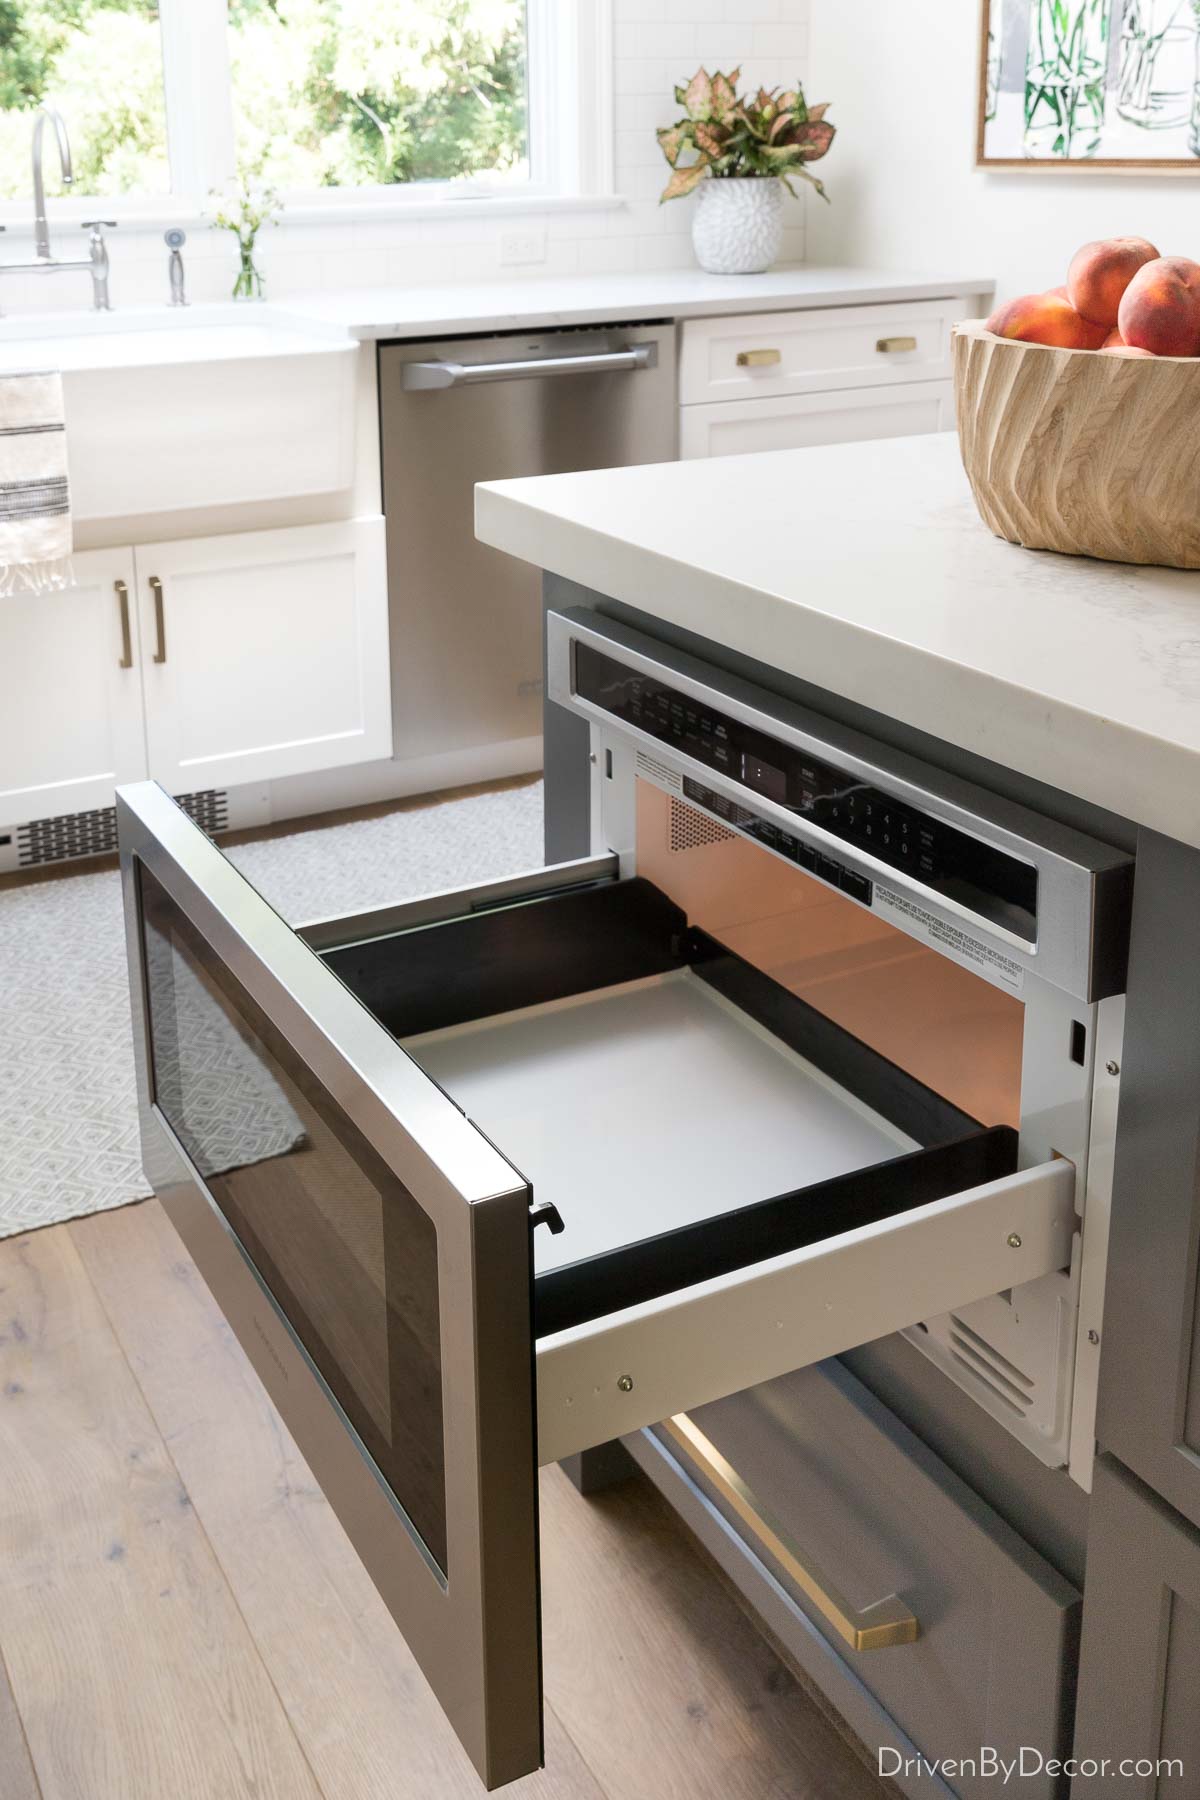 Microwave drawer in kitchen island